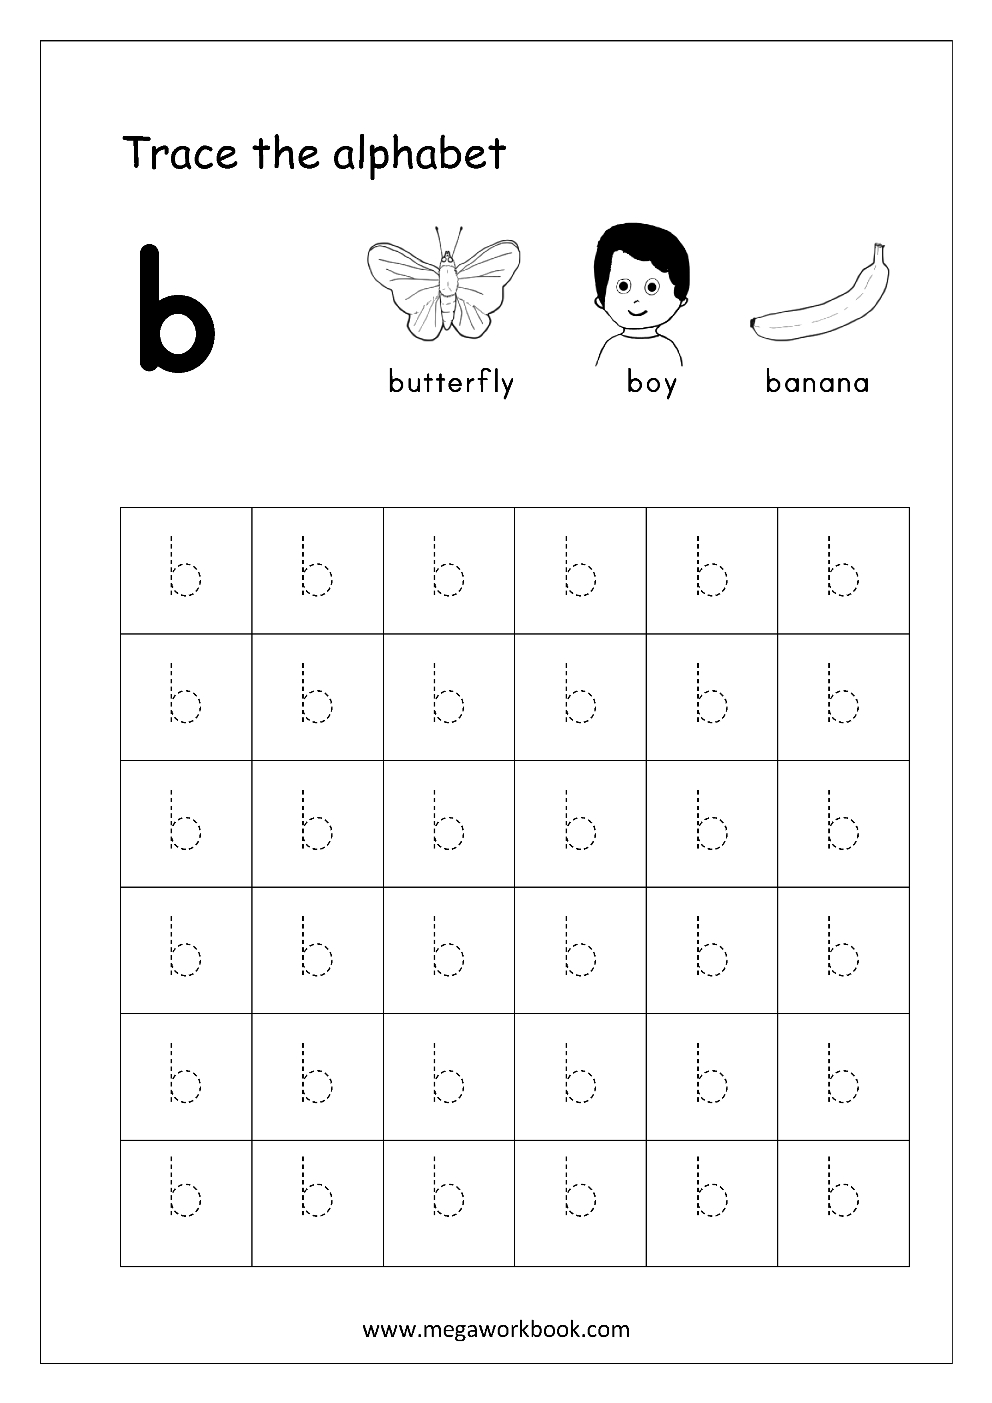 Free English Worksheets - Alphabet Tracing (Small Letters intended for Alphabet Tracing Worksheets Free